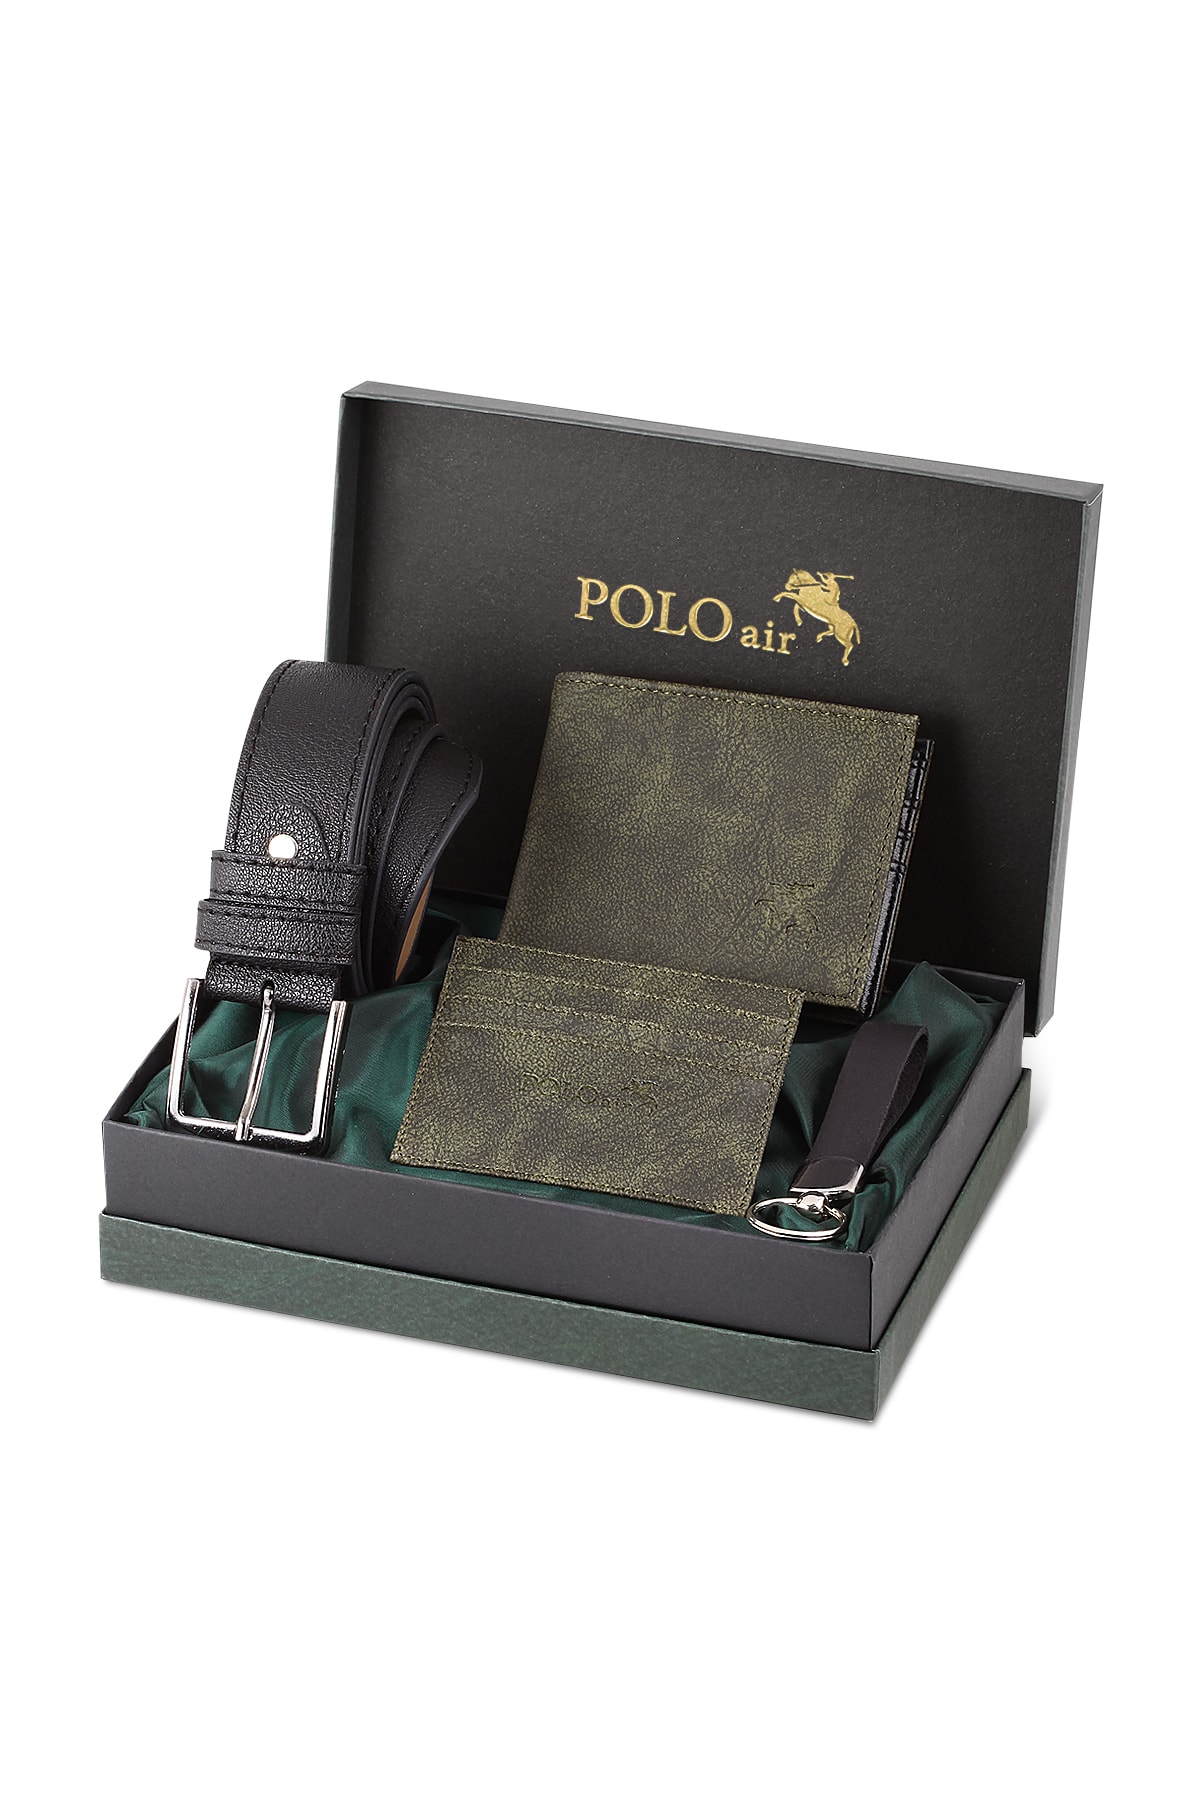 Levně Polo Air Belt, Wallet, Card Holder, Keychain, Green Set in a Gift Box